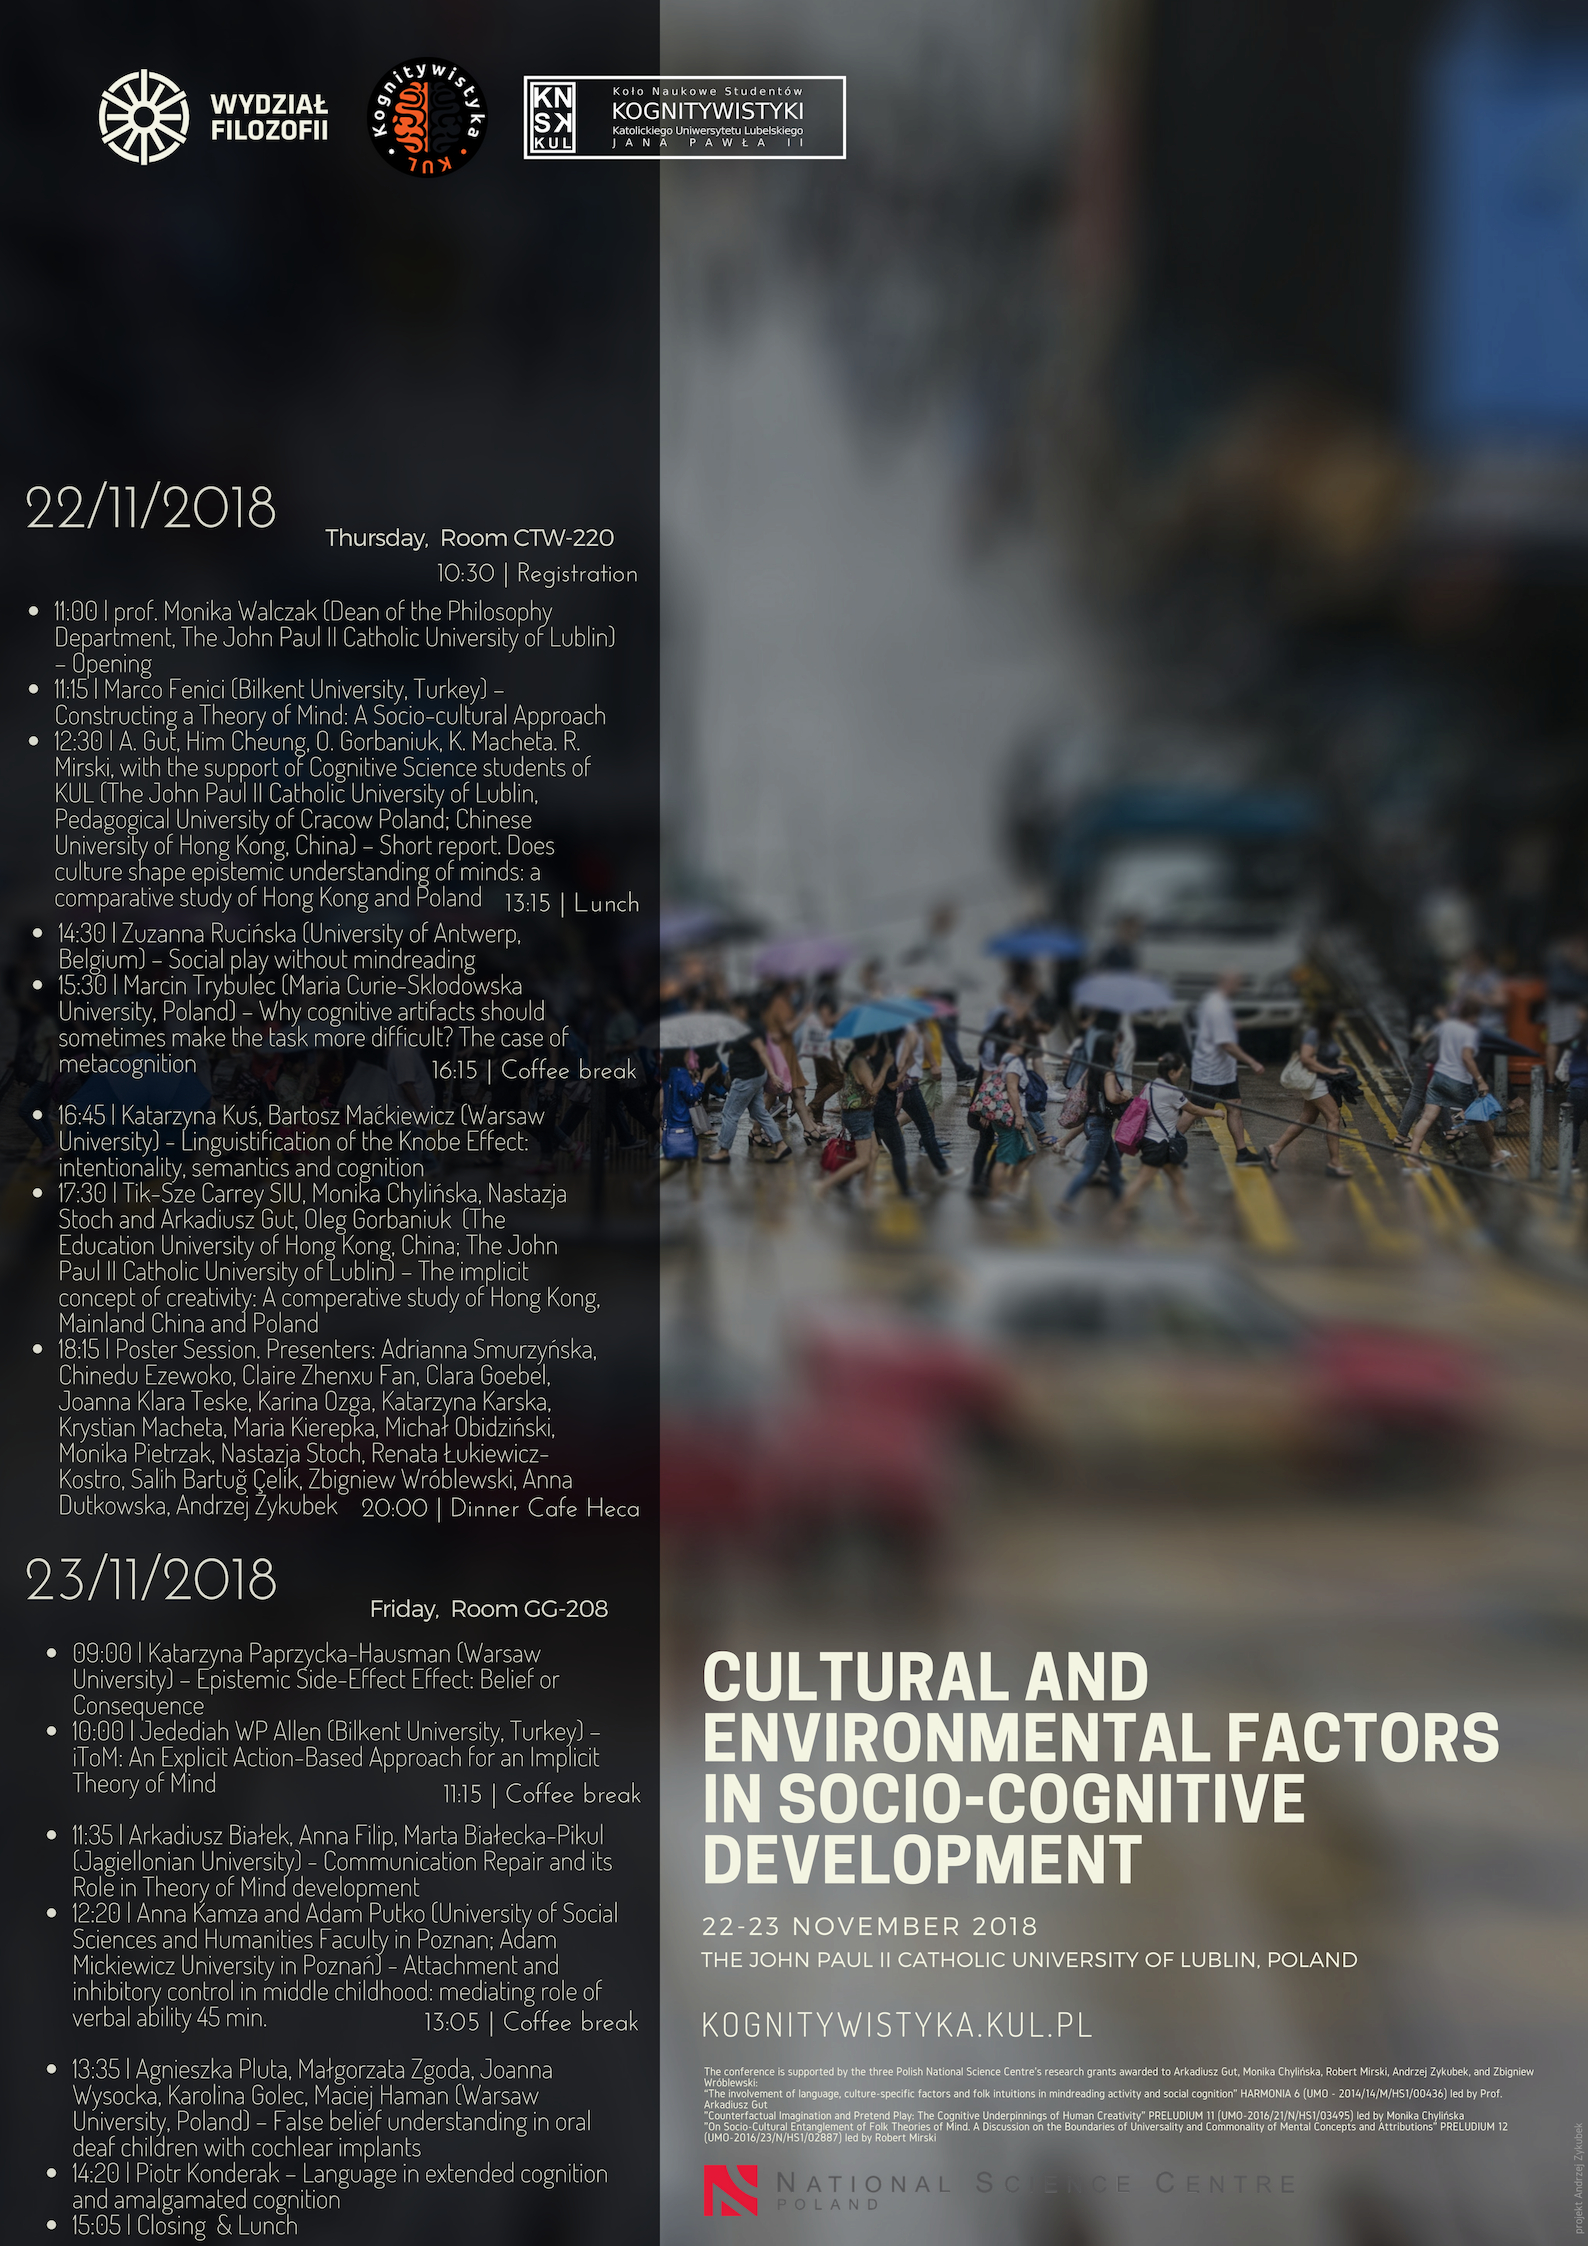 Cultural and environmental factors in socio-cognitive development